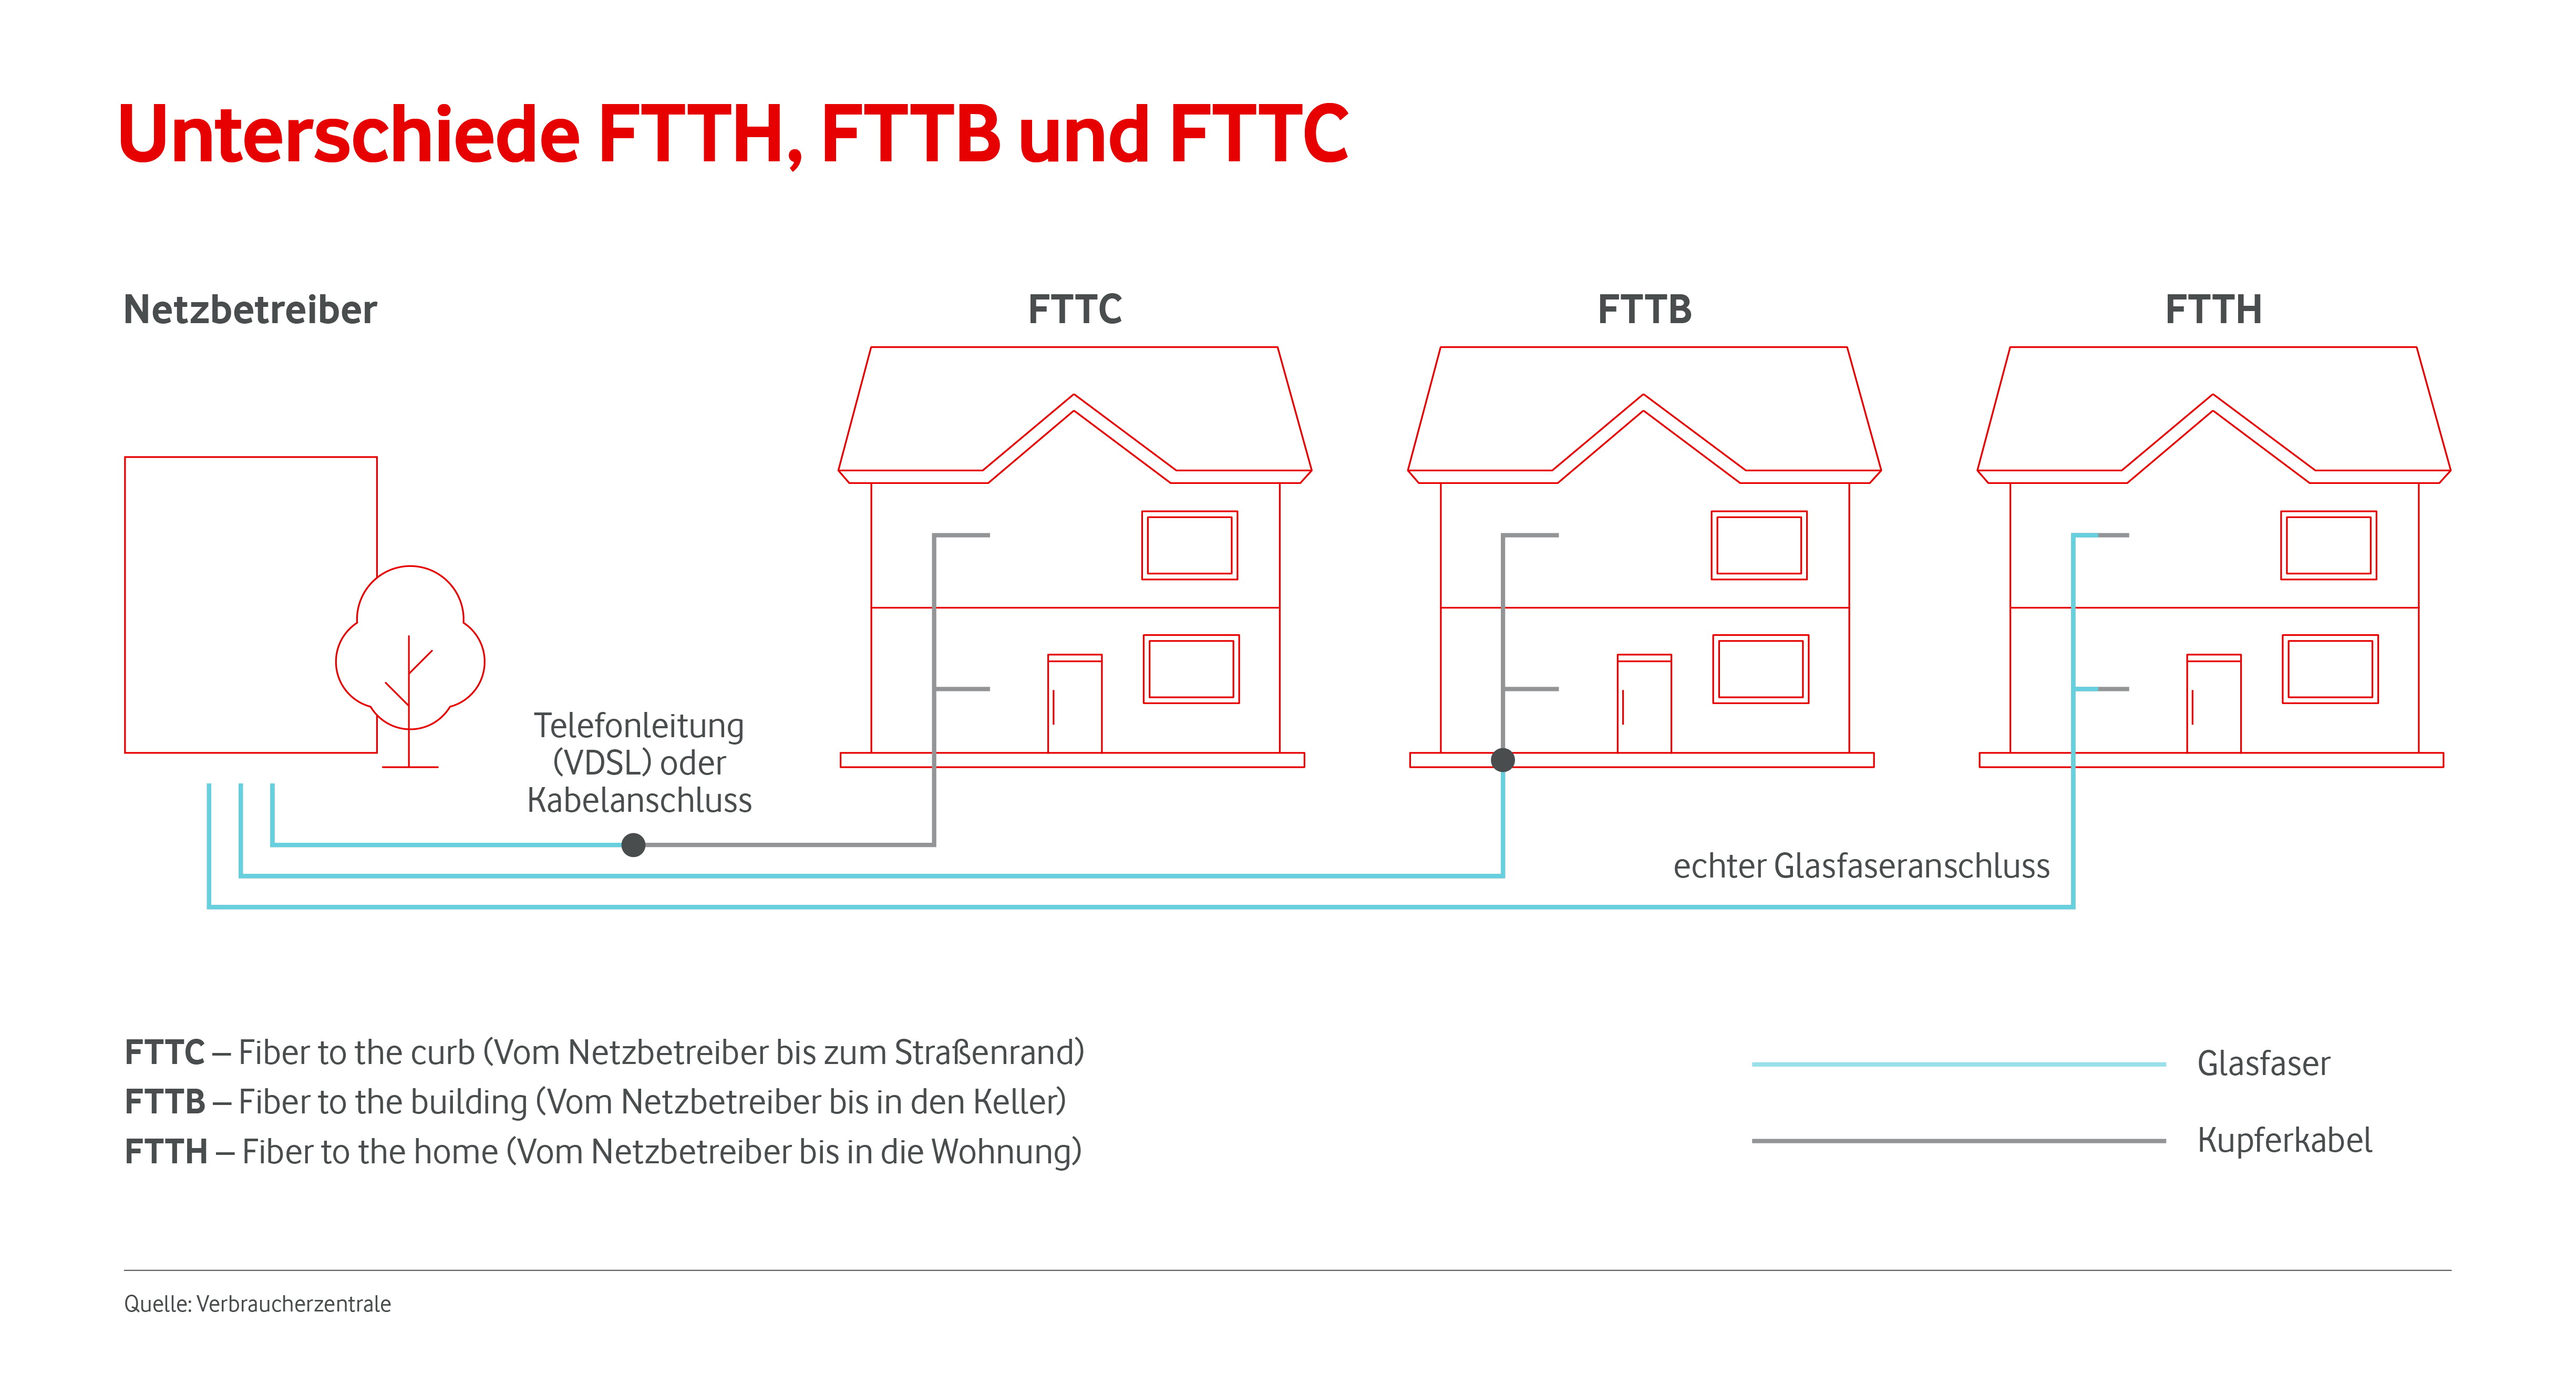 Unterschiede-FTTH-FTTB-FTTC